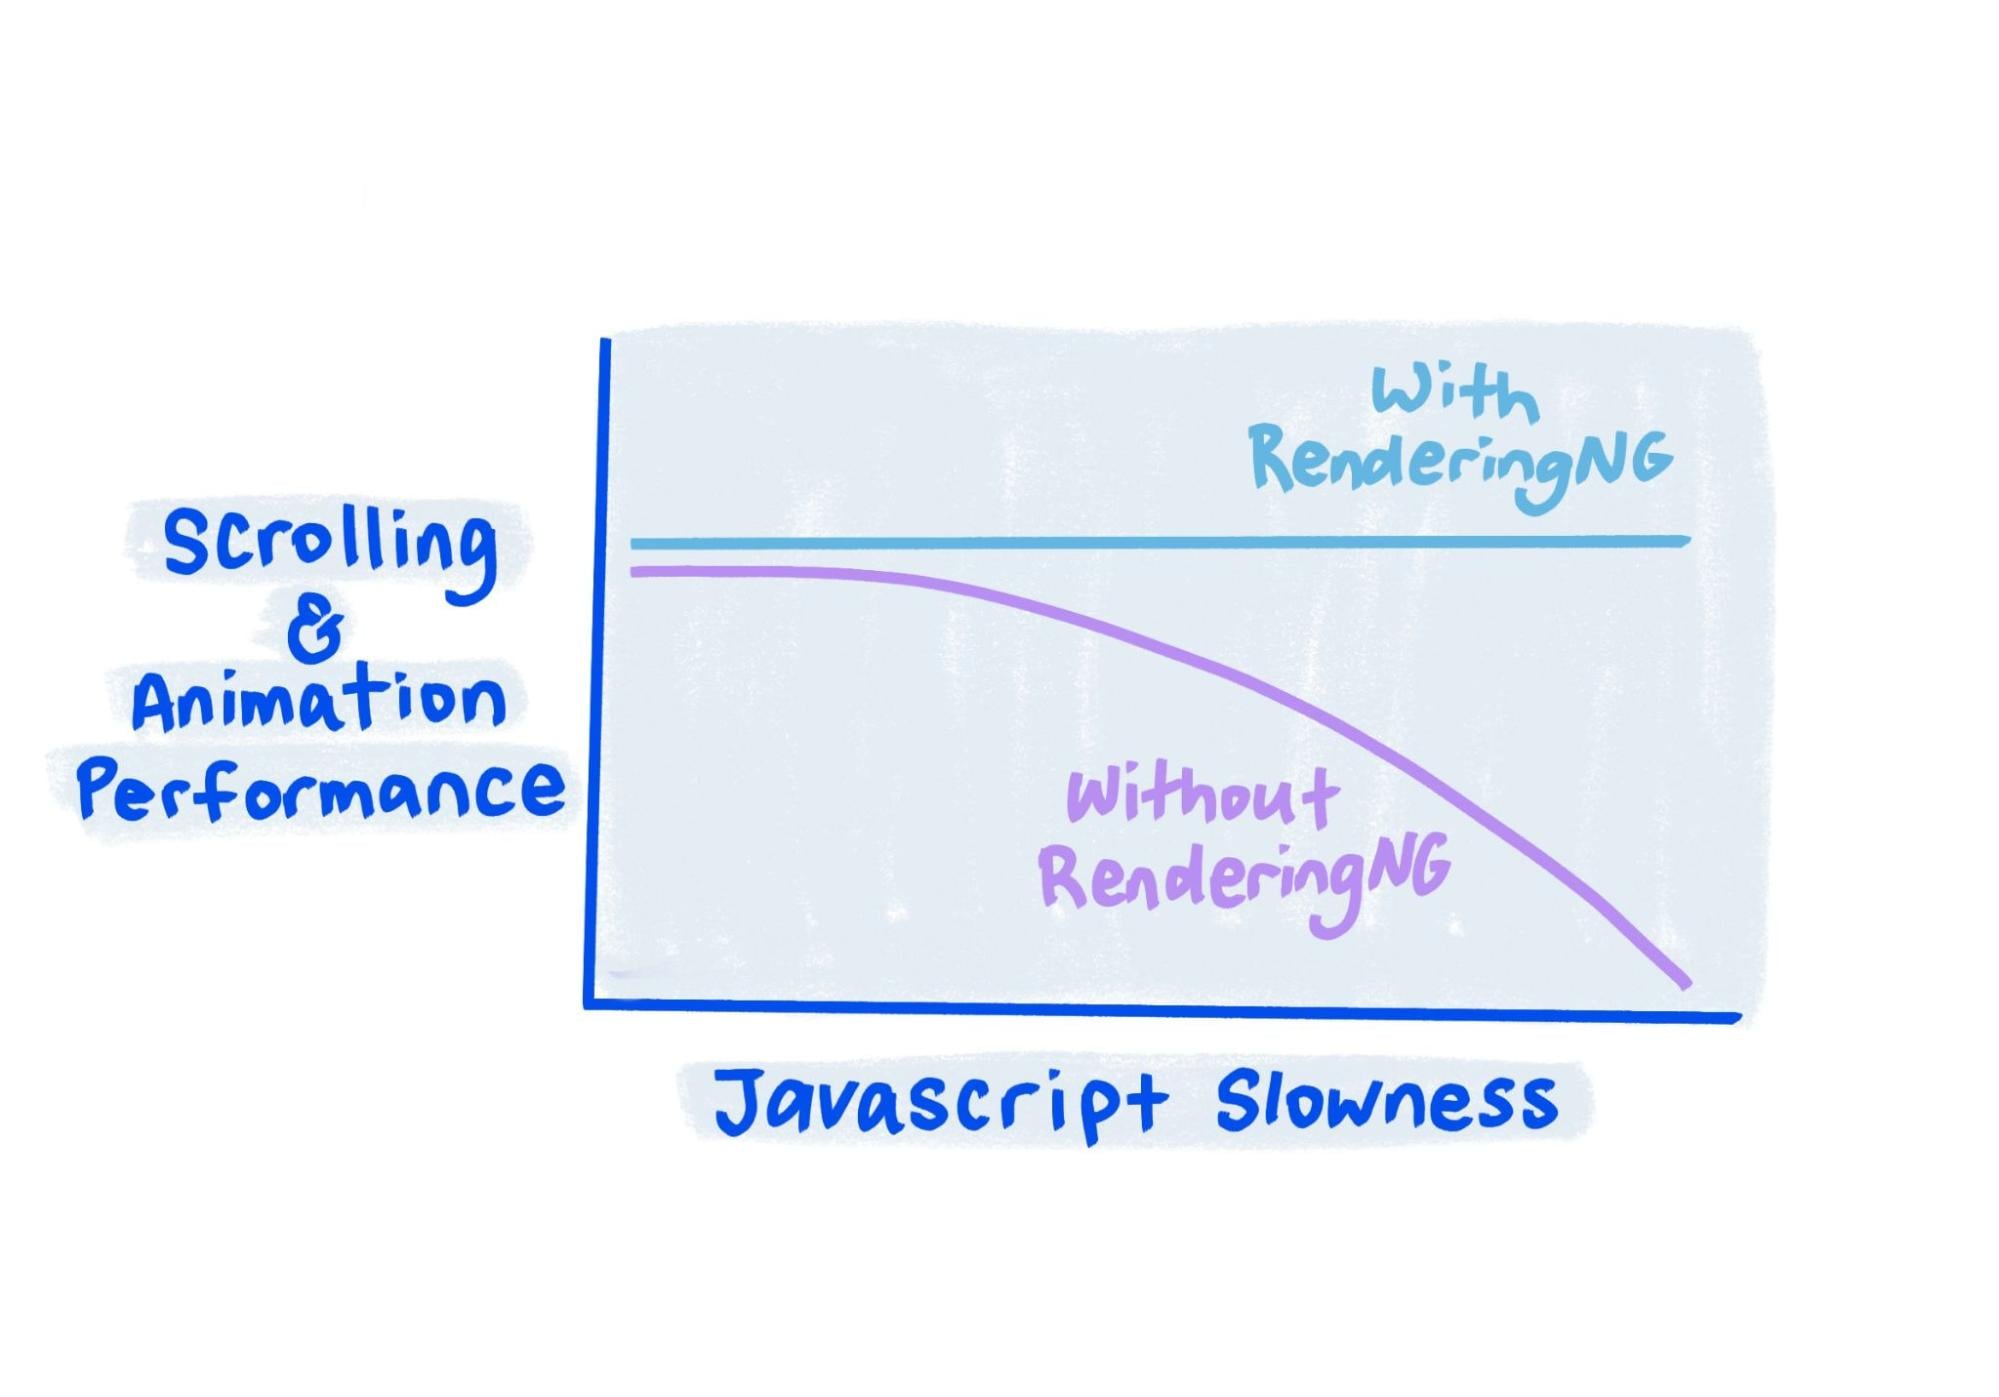 Sketch نشان می دهد که با RenderingNG عملکرد حتی زمانی که جاوا اسکریپت بسیار کند است ثابت می ماند.